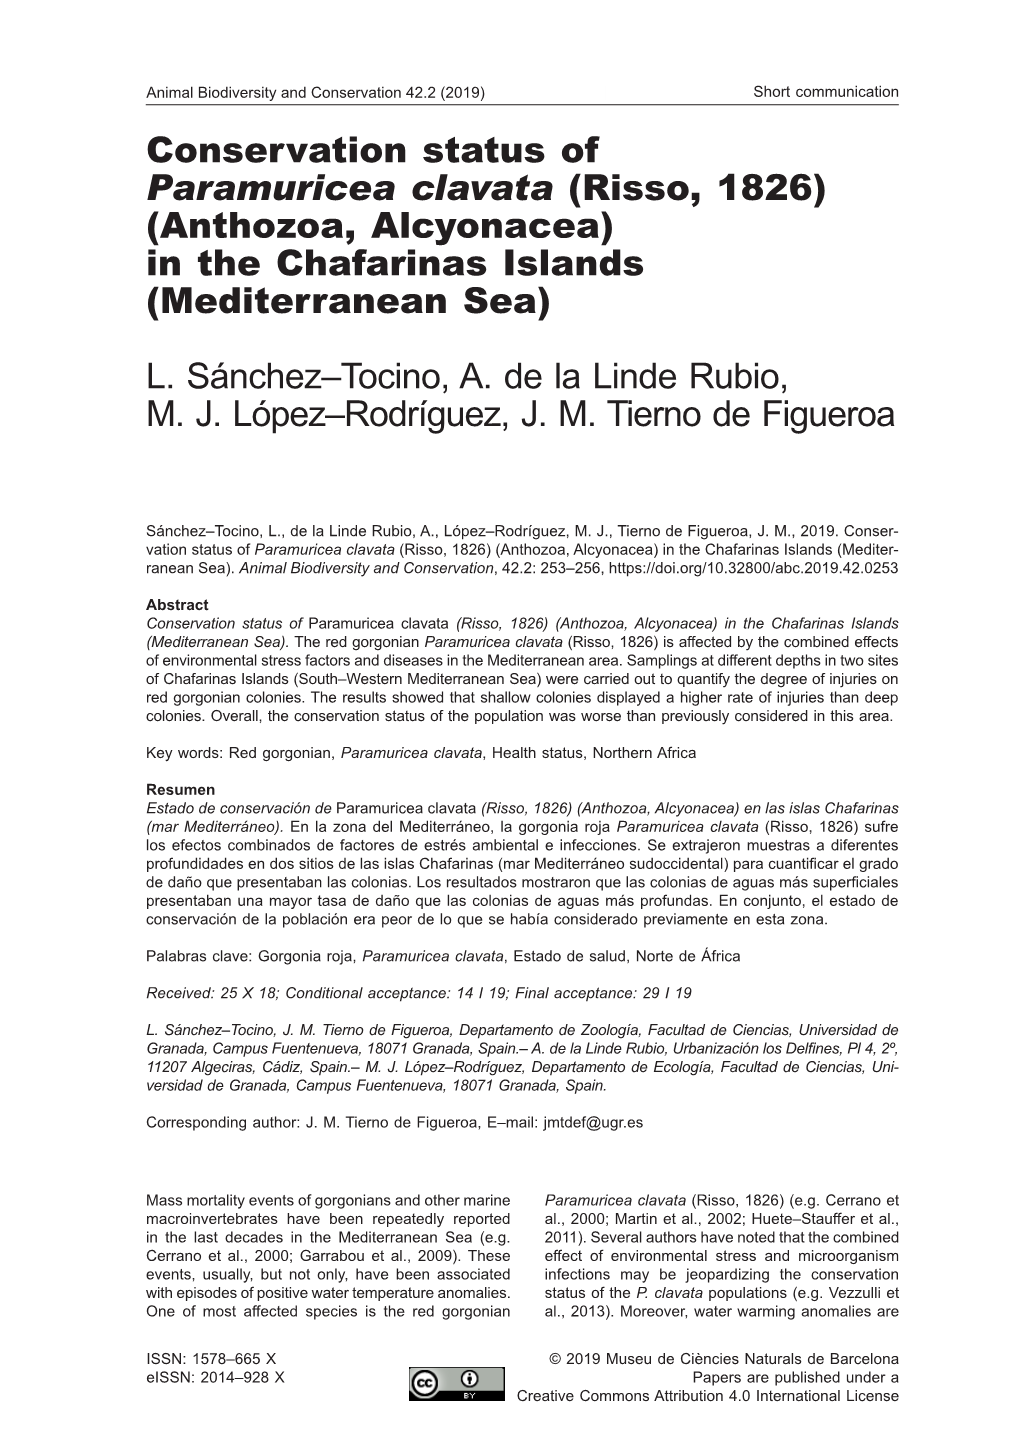 Conservation Status of Paramuricea Clavata (Risso, 1826) (Anthozoa, Alcyonacea) in the Chafarinas Islands (Mediterranean Sea)